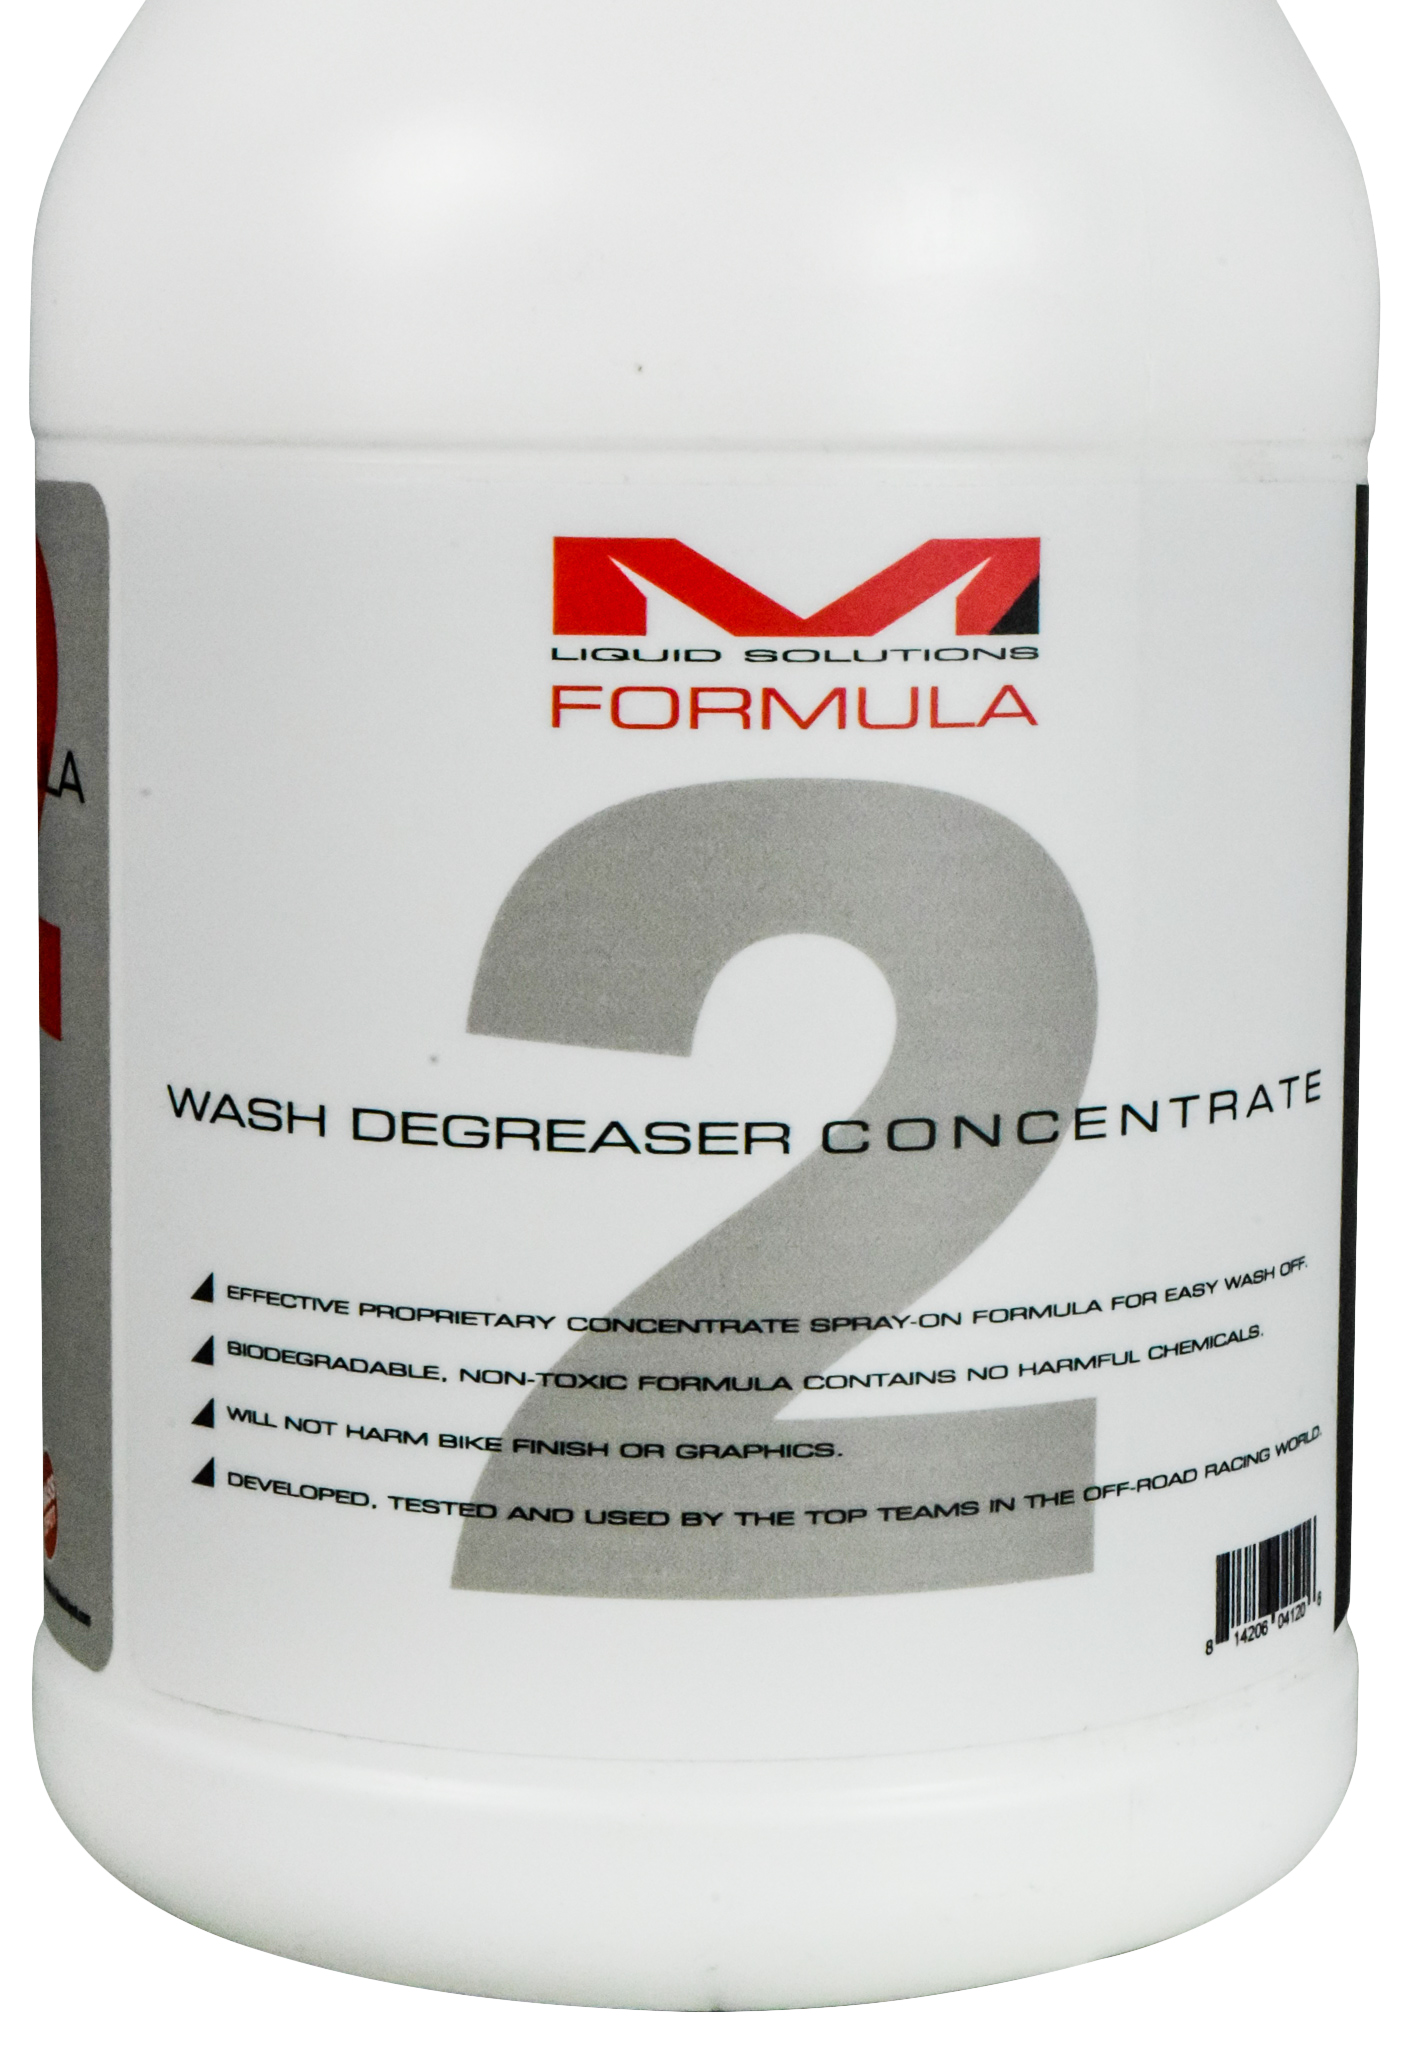 Matrix Liquid Solutions Formula 2 Biodegradable Wash Degreaser Gallon 2 Pack - image 5 of 5